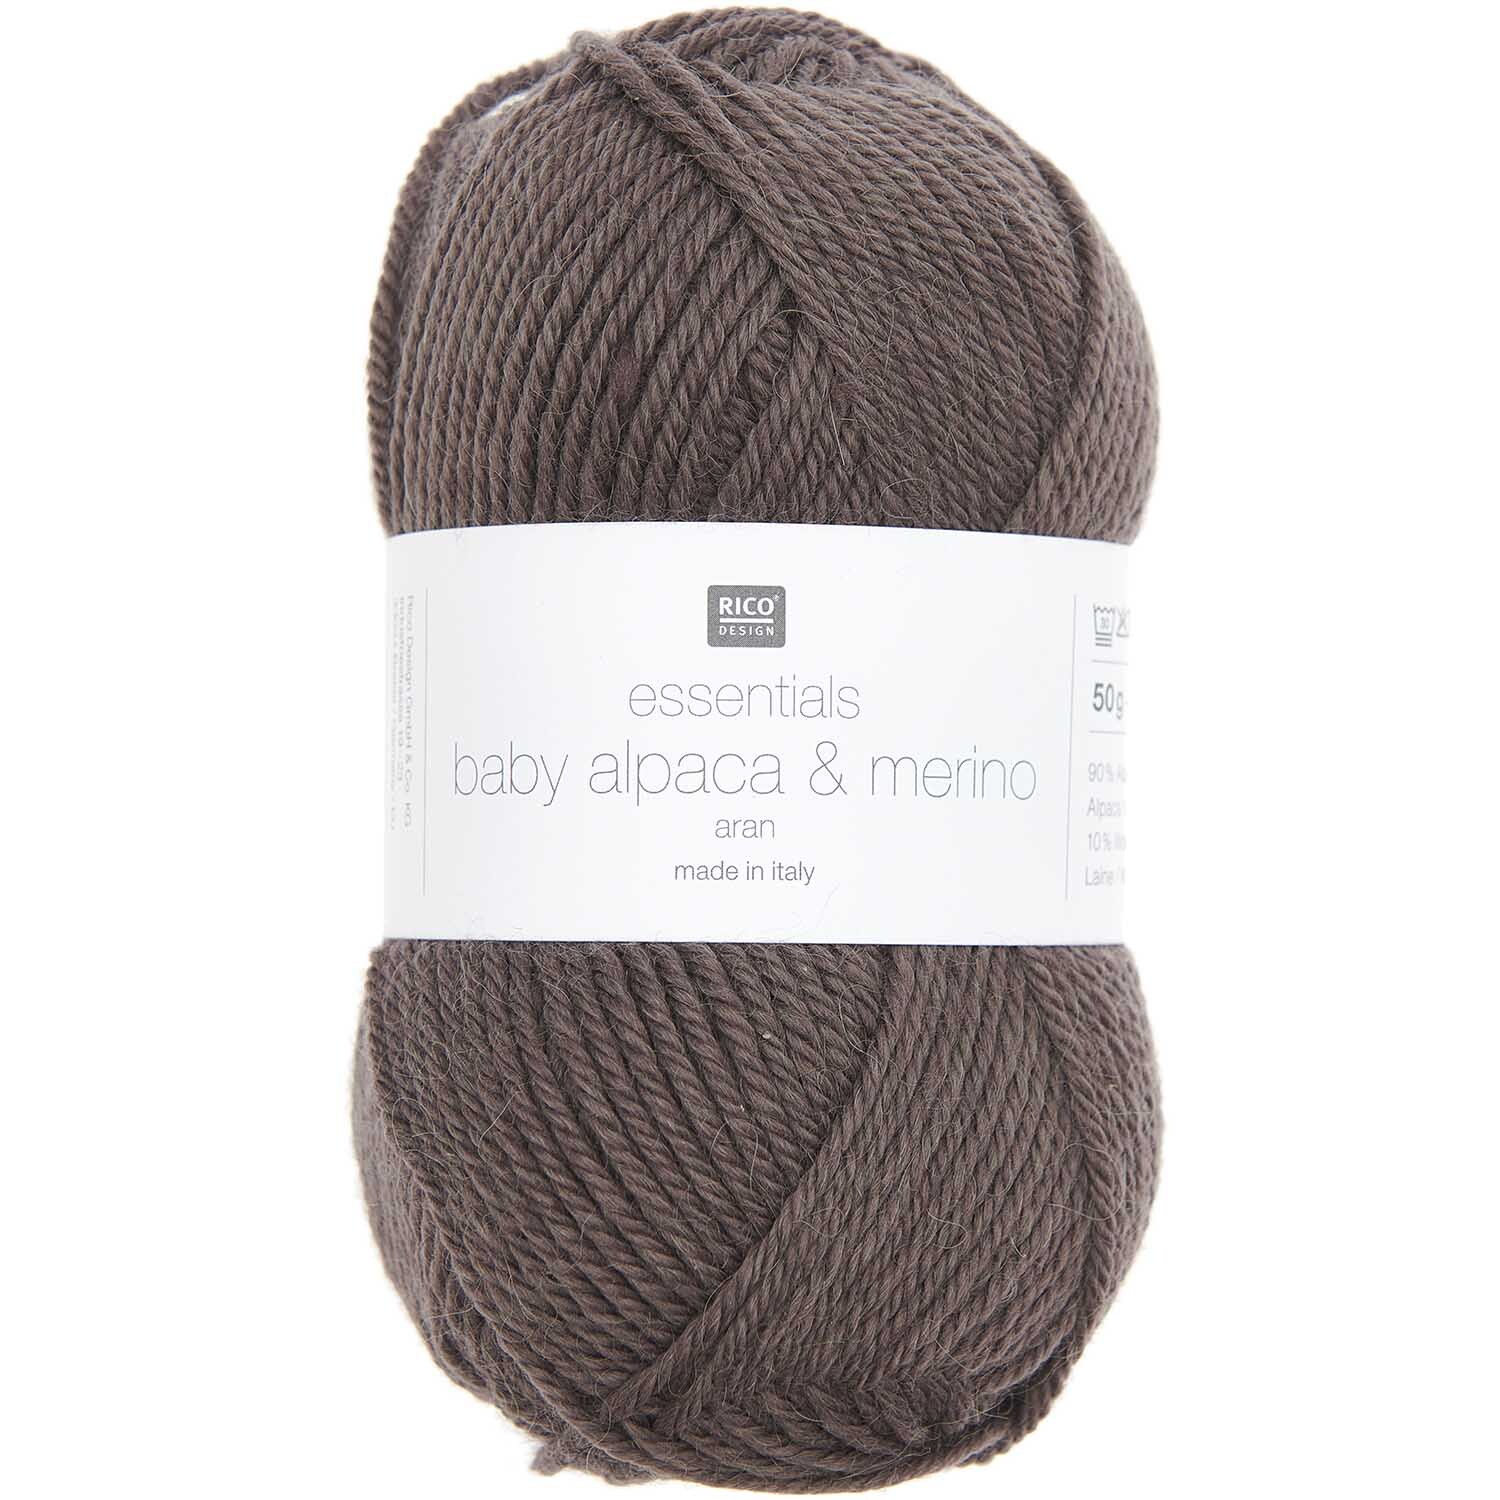 Essentials Baby Alpaca & Merino aran